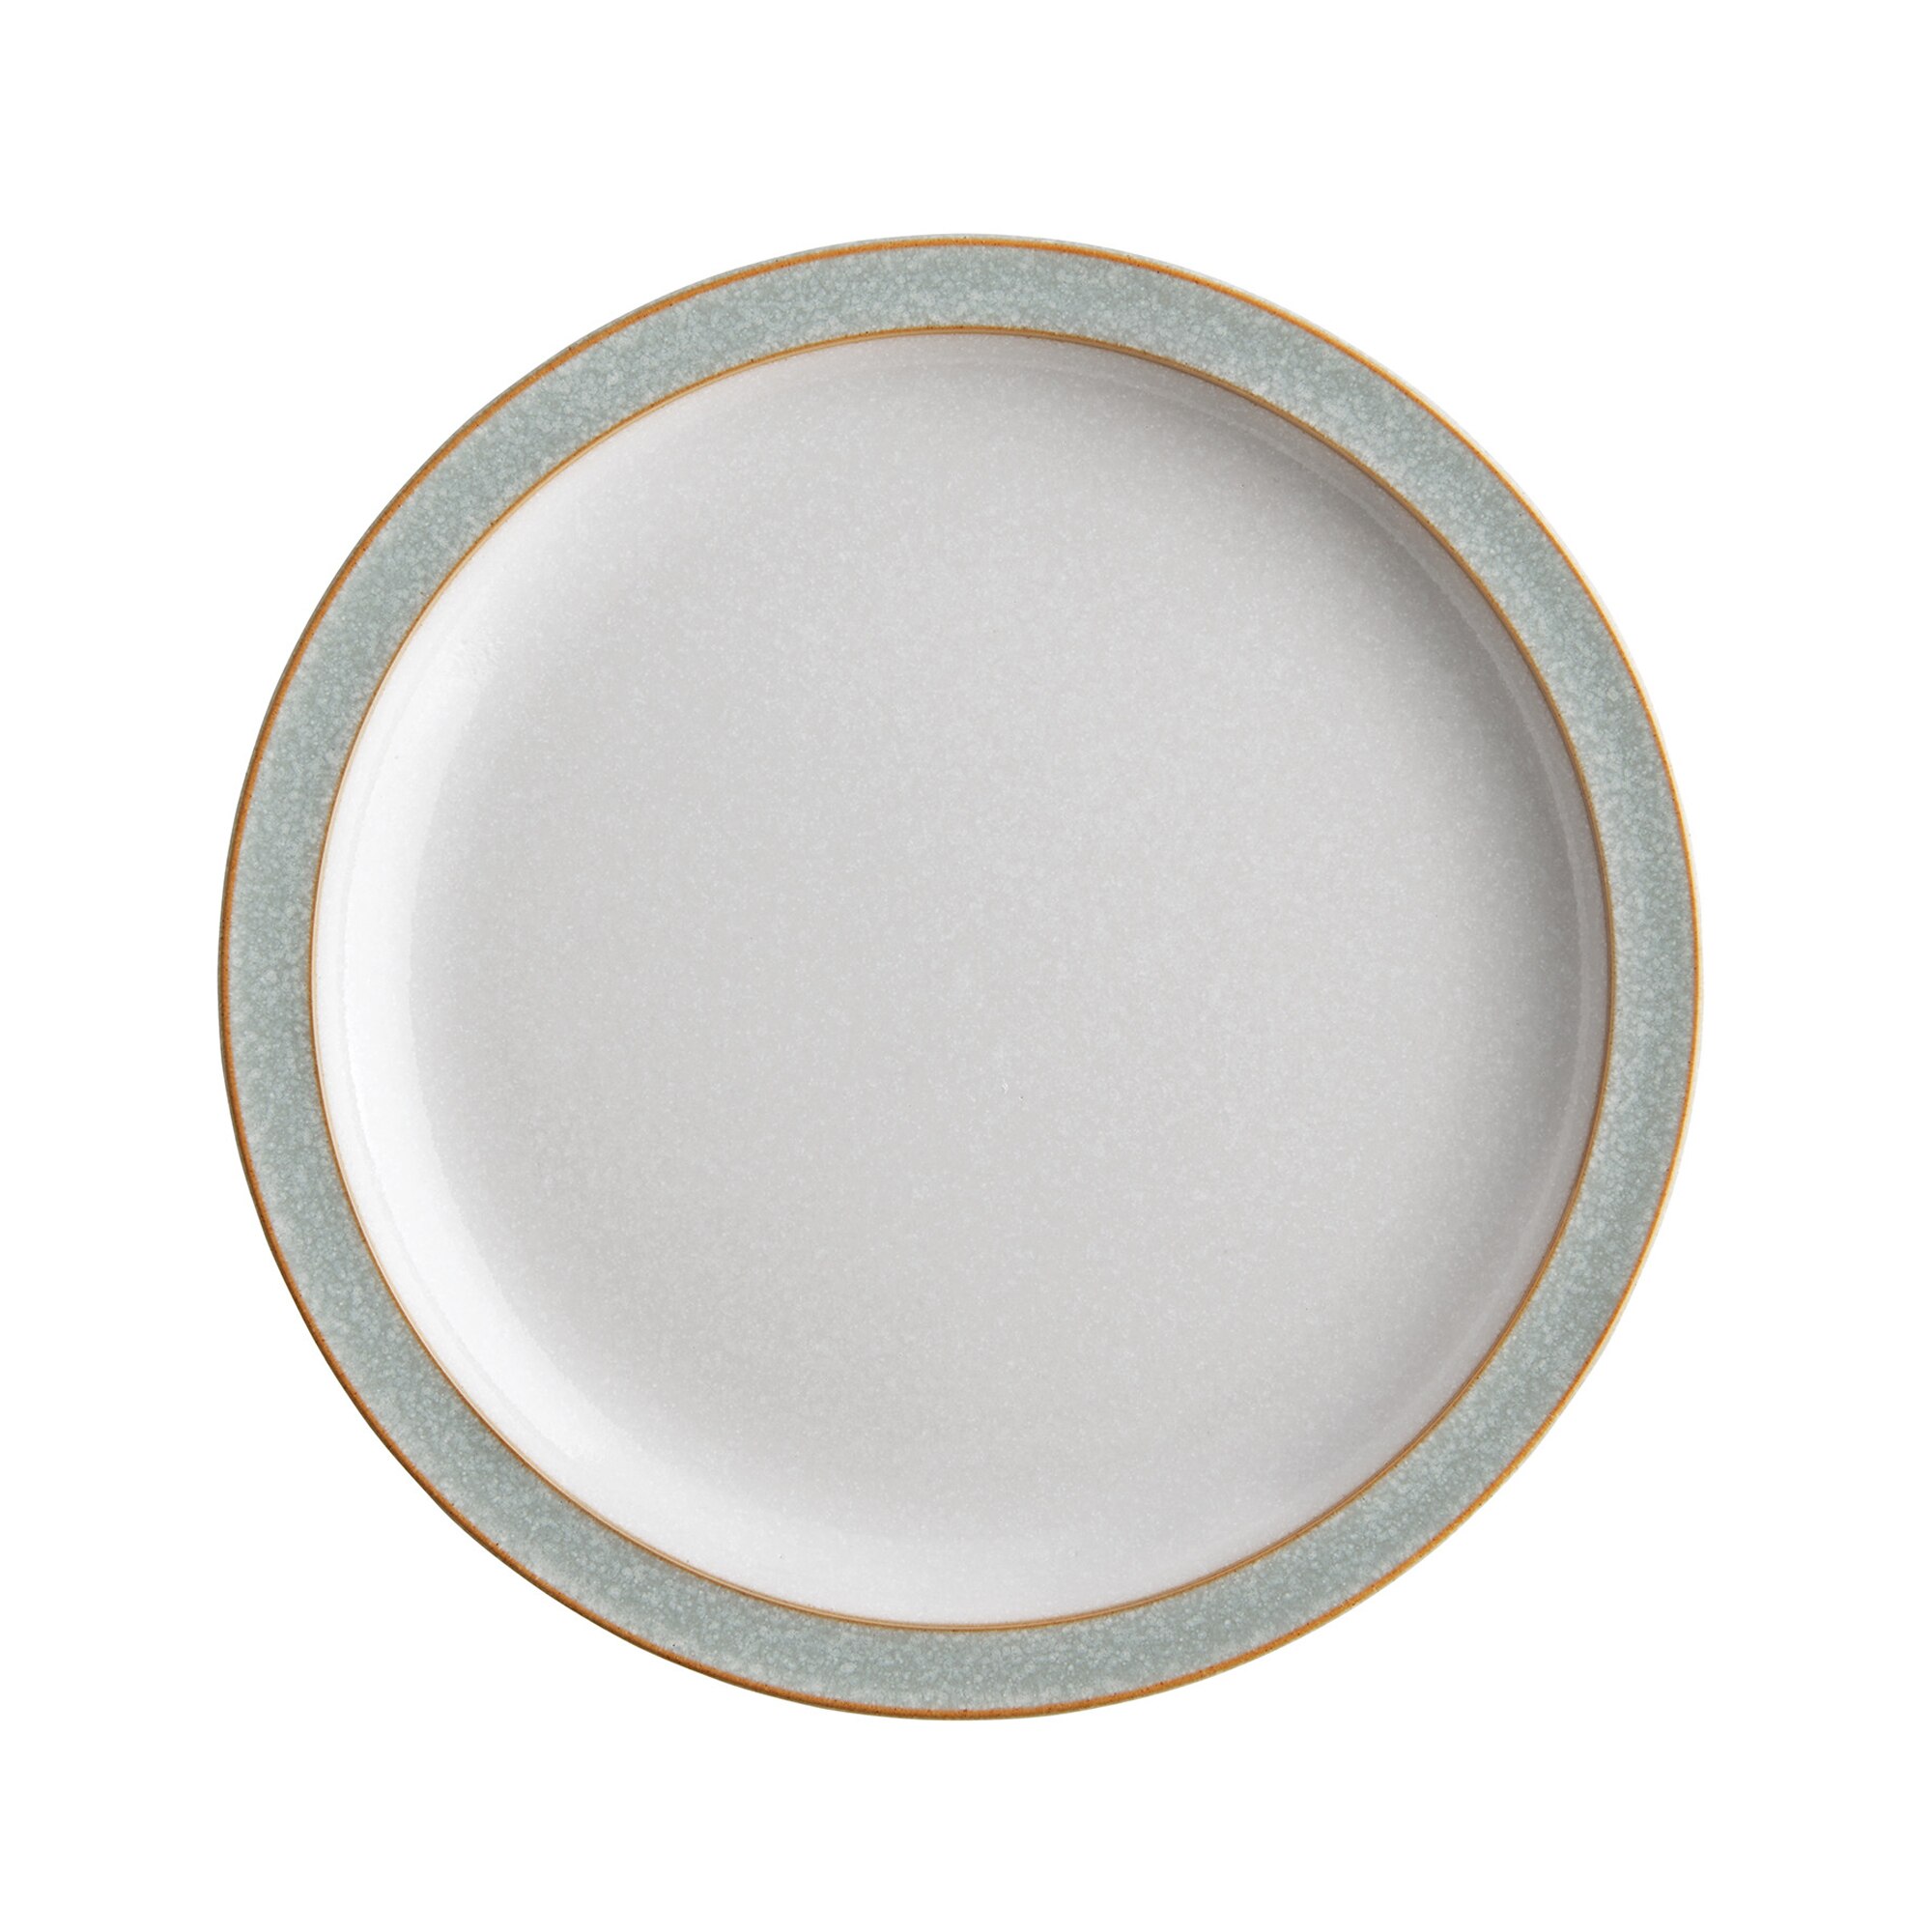 Elements Light Grey Dinner Plate